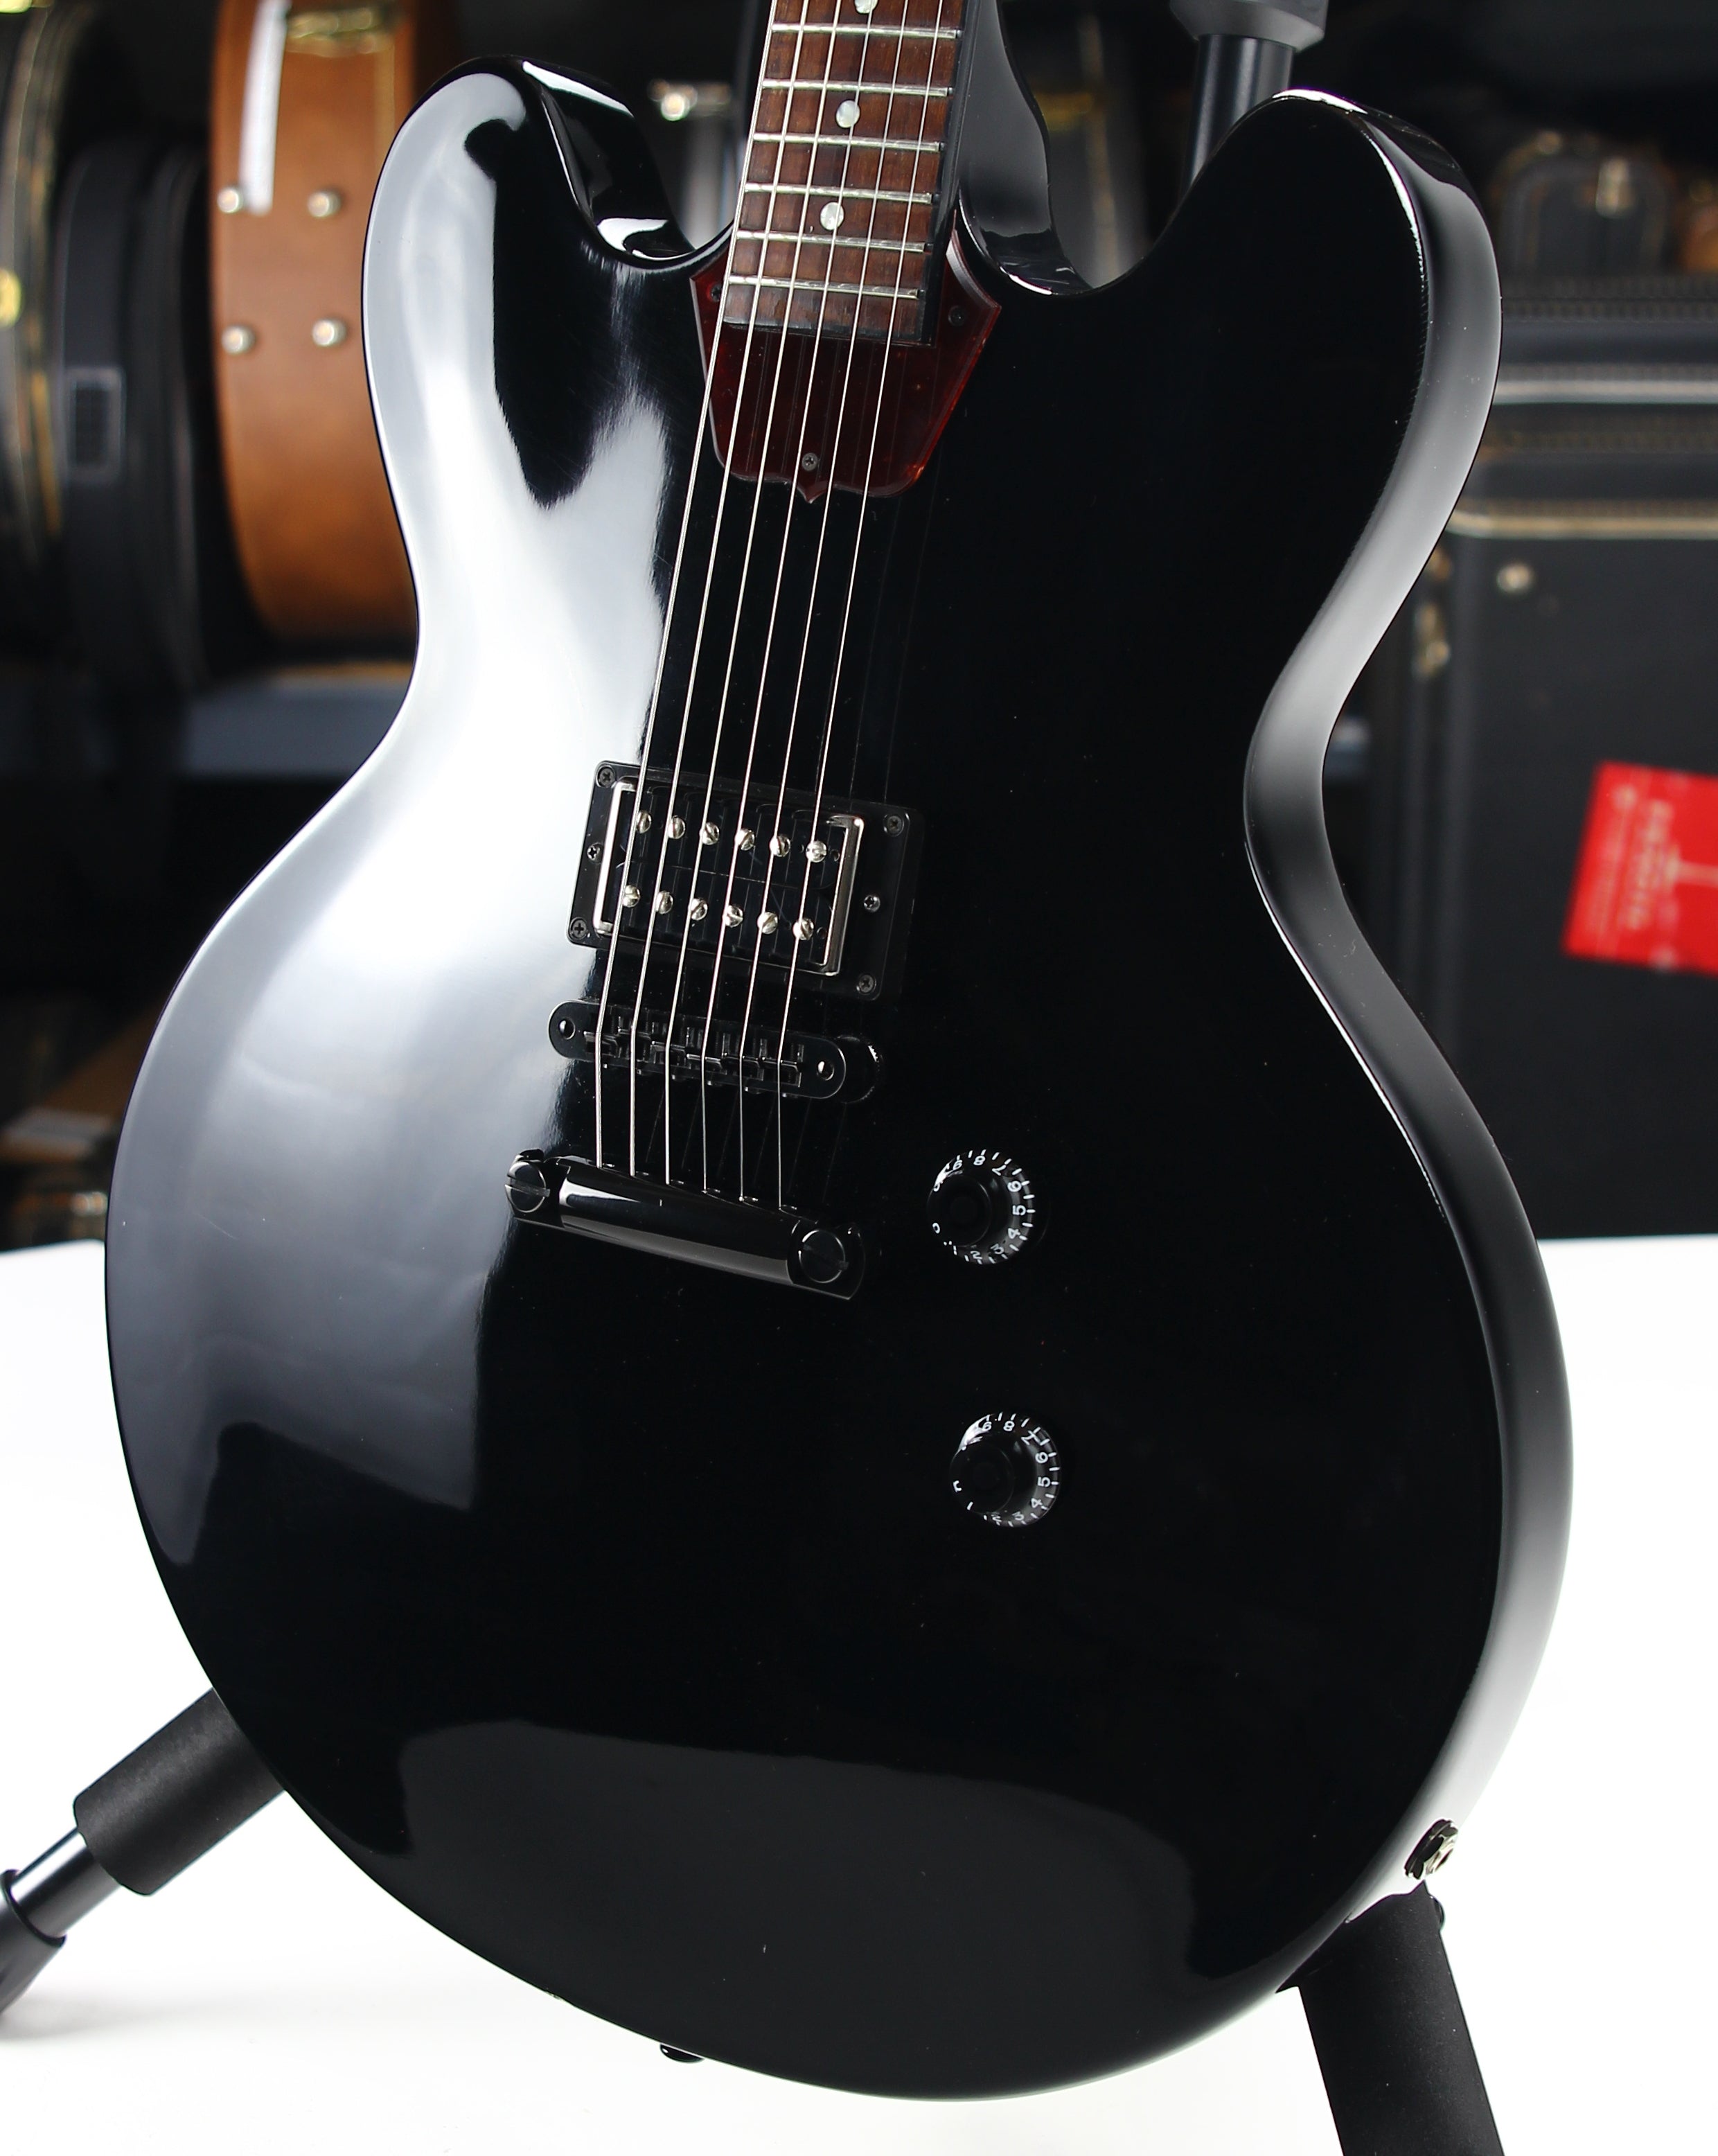 *SOLD*  2013 Gibson Memphis ES-335 Studio Stoptail - Ebony Black, One Pickup Tom Delonge-type ES-333